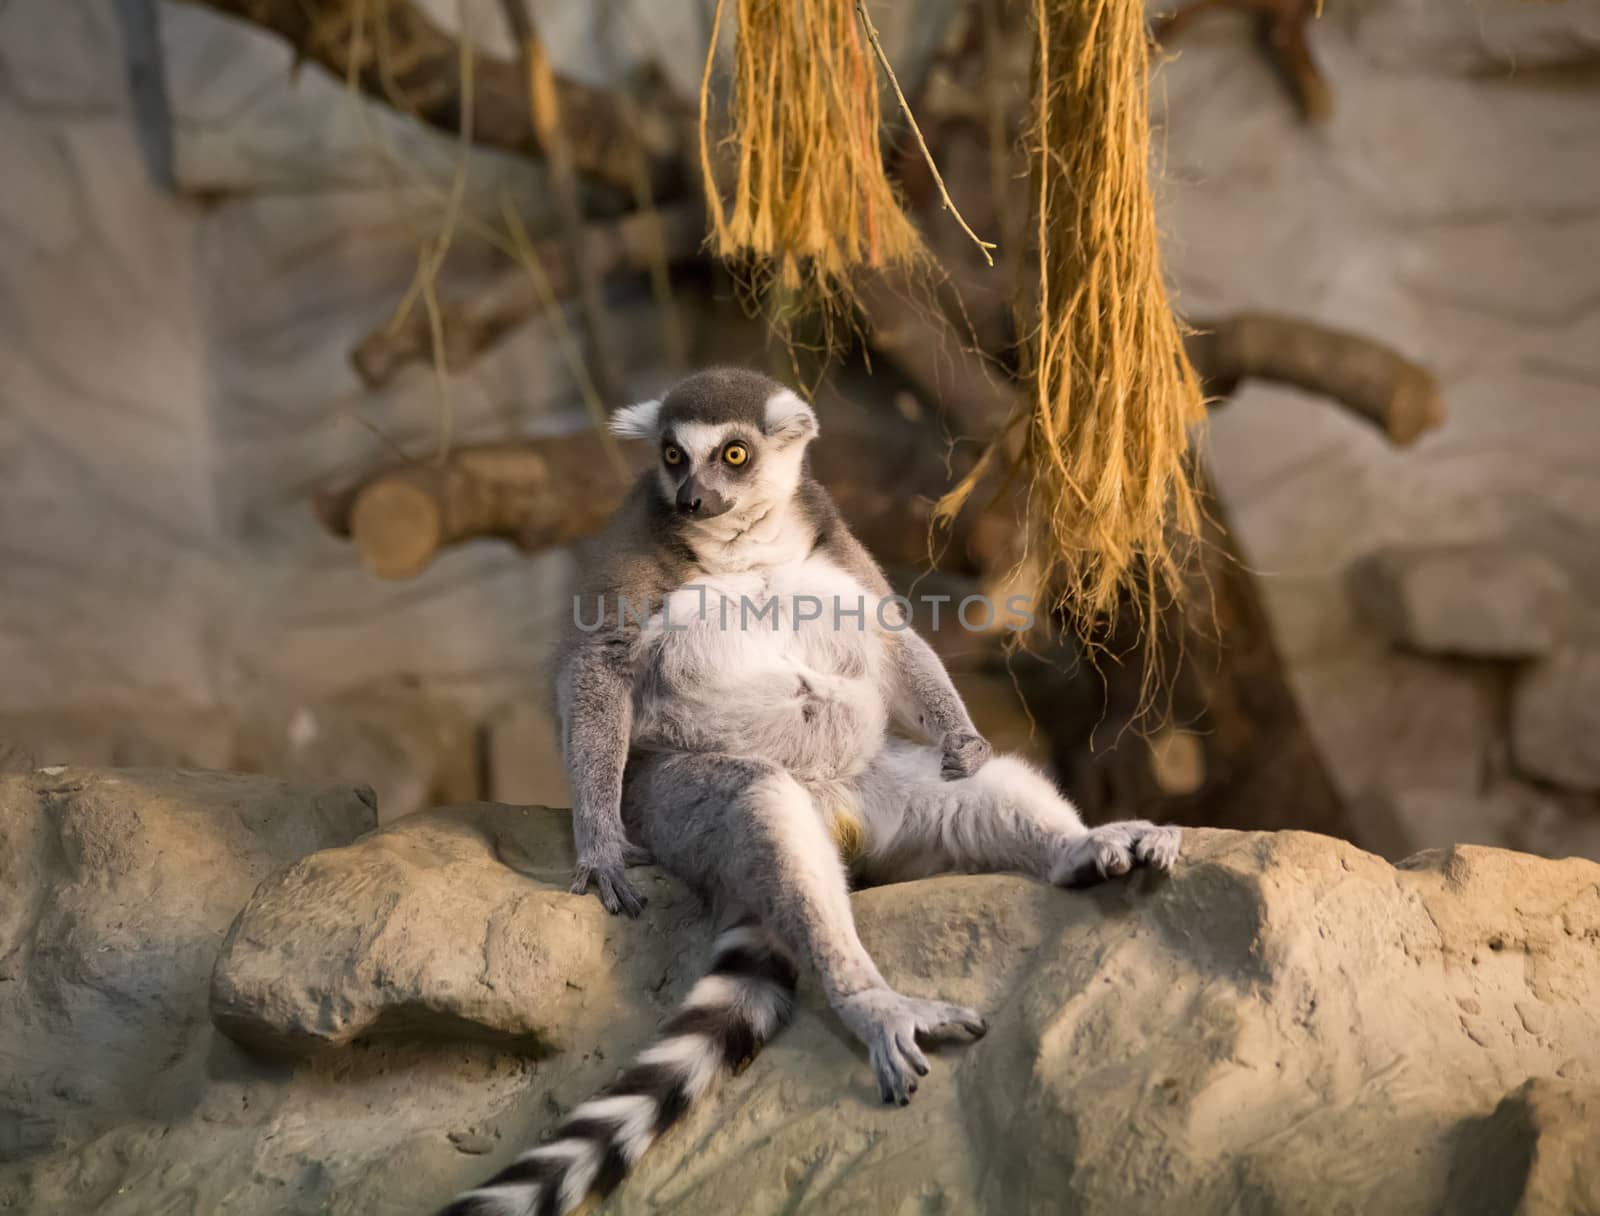 Lemur funny animal by desant7474